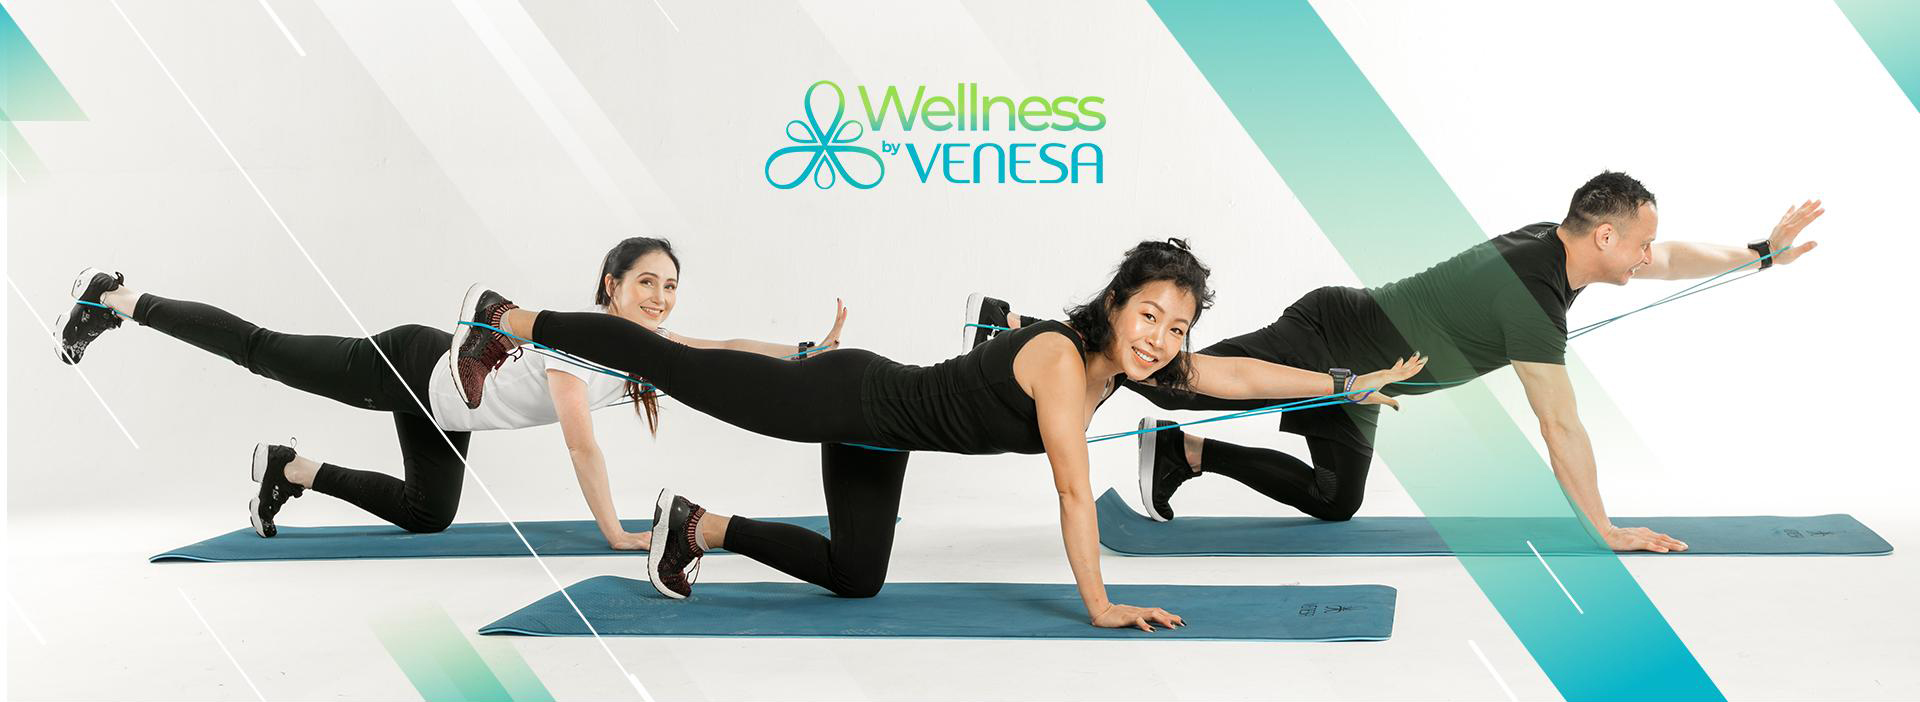 wellness by venesa